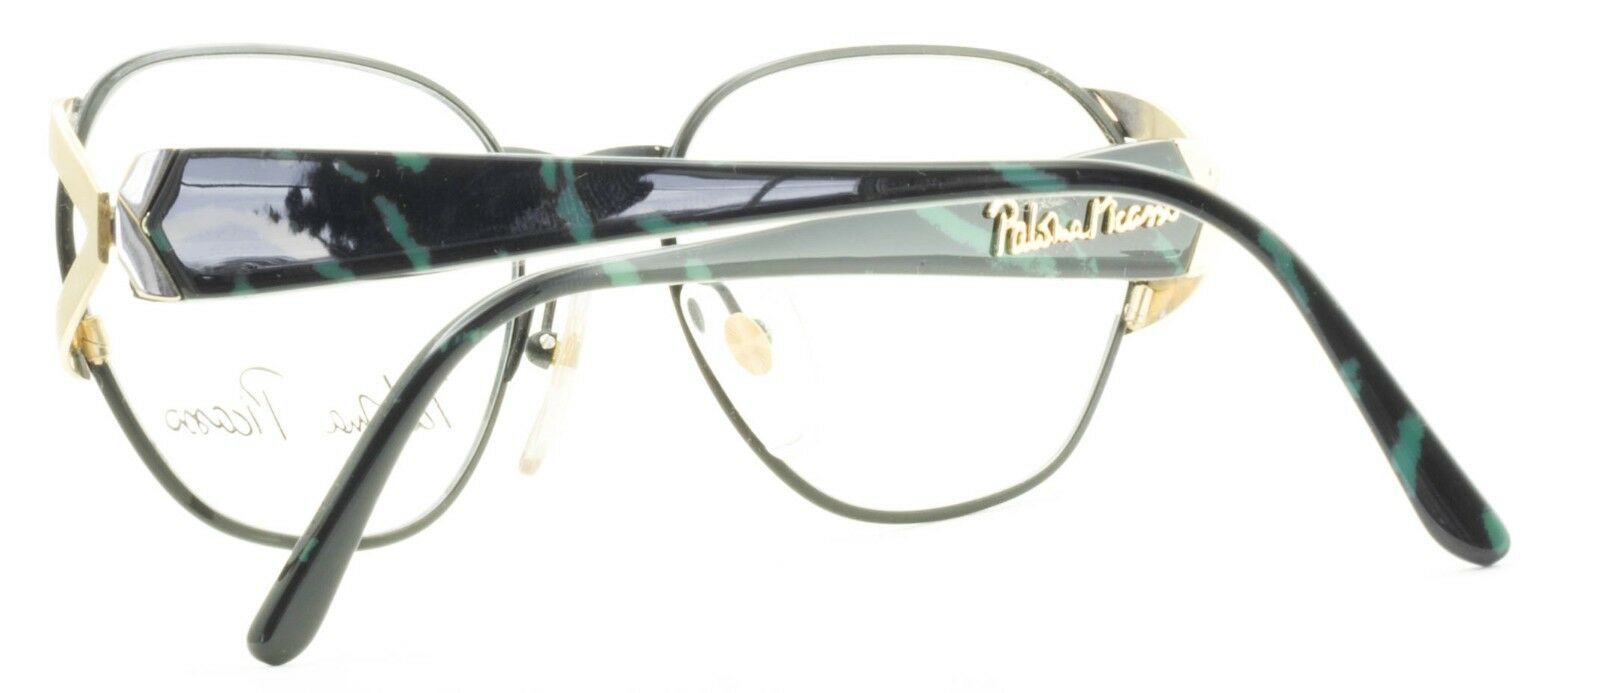 PALOMA PICASSO 3717 43 Vintage FRAMES NEW Glasses RX Optical Eyewear Eyeglasses